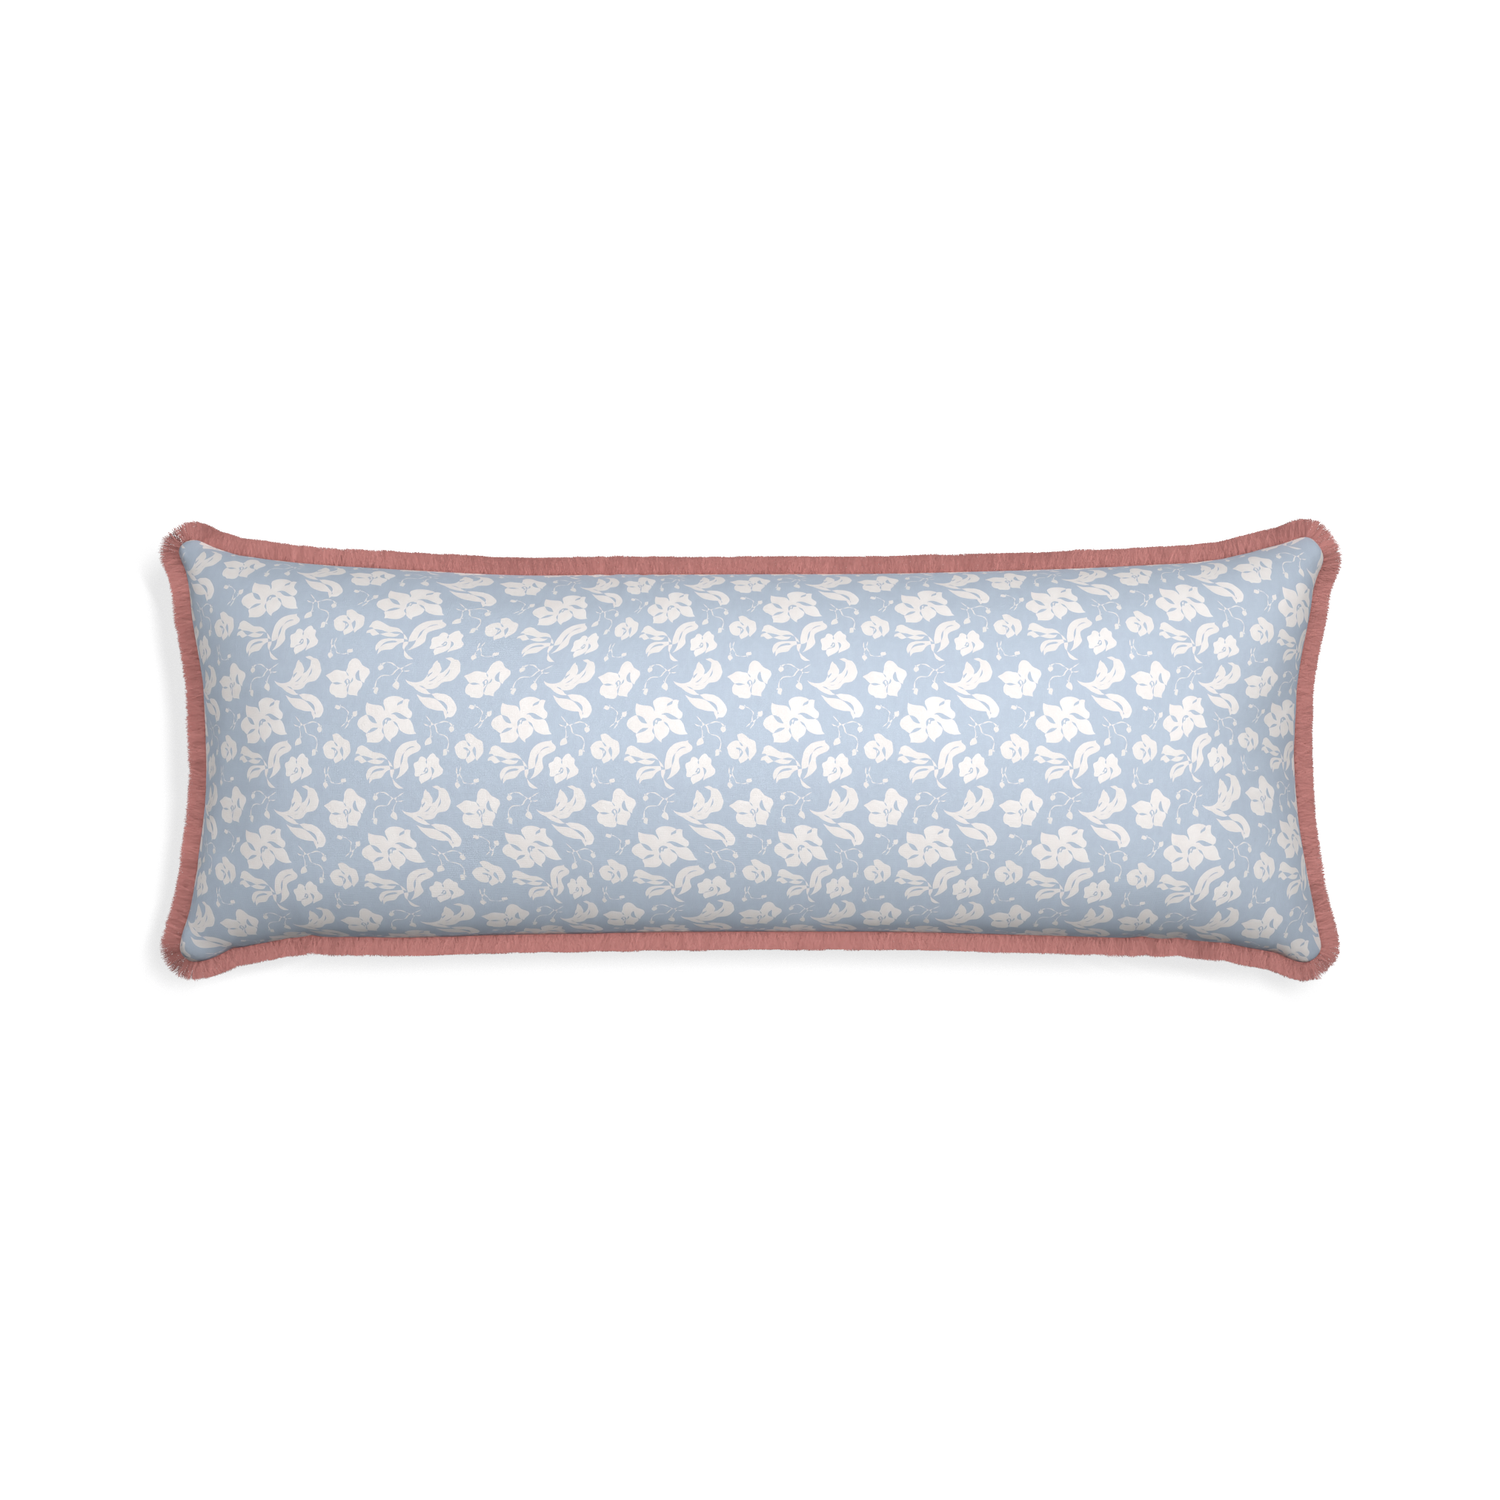 Xl-lumbar georgia custom pillow with d fringe on white background